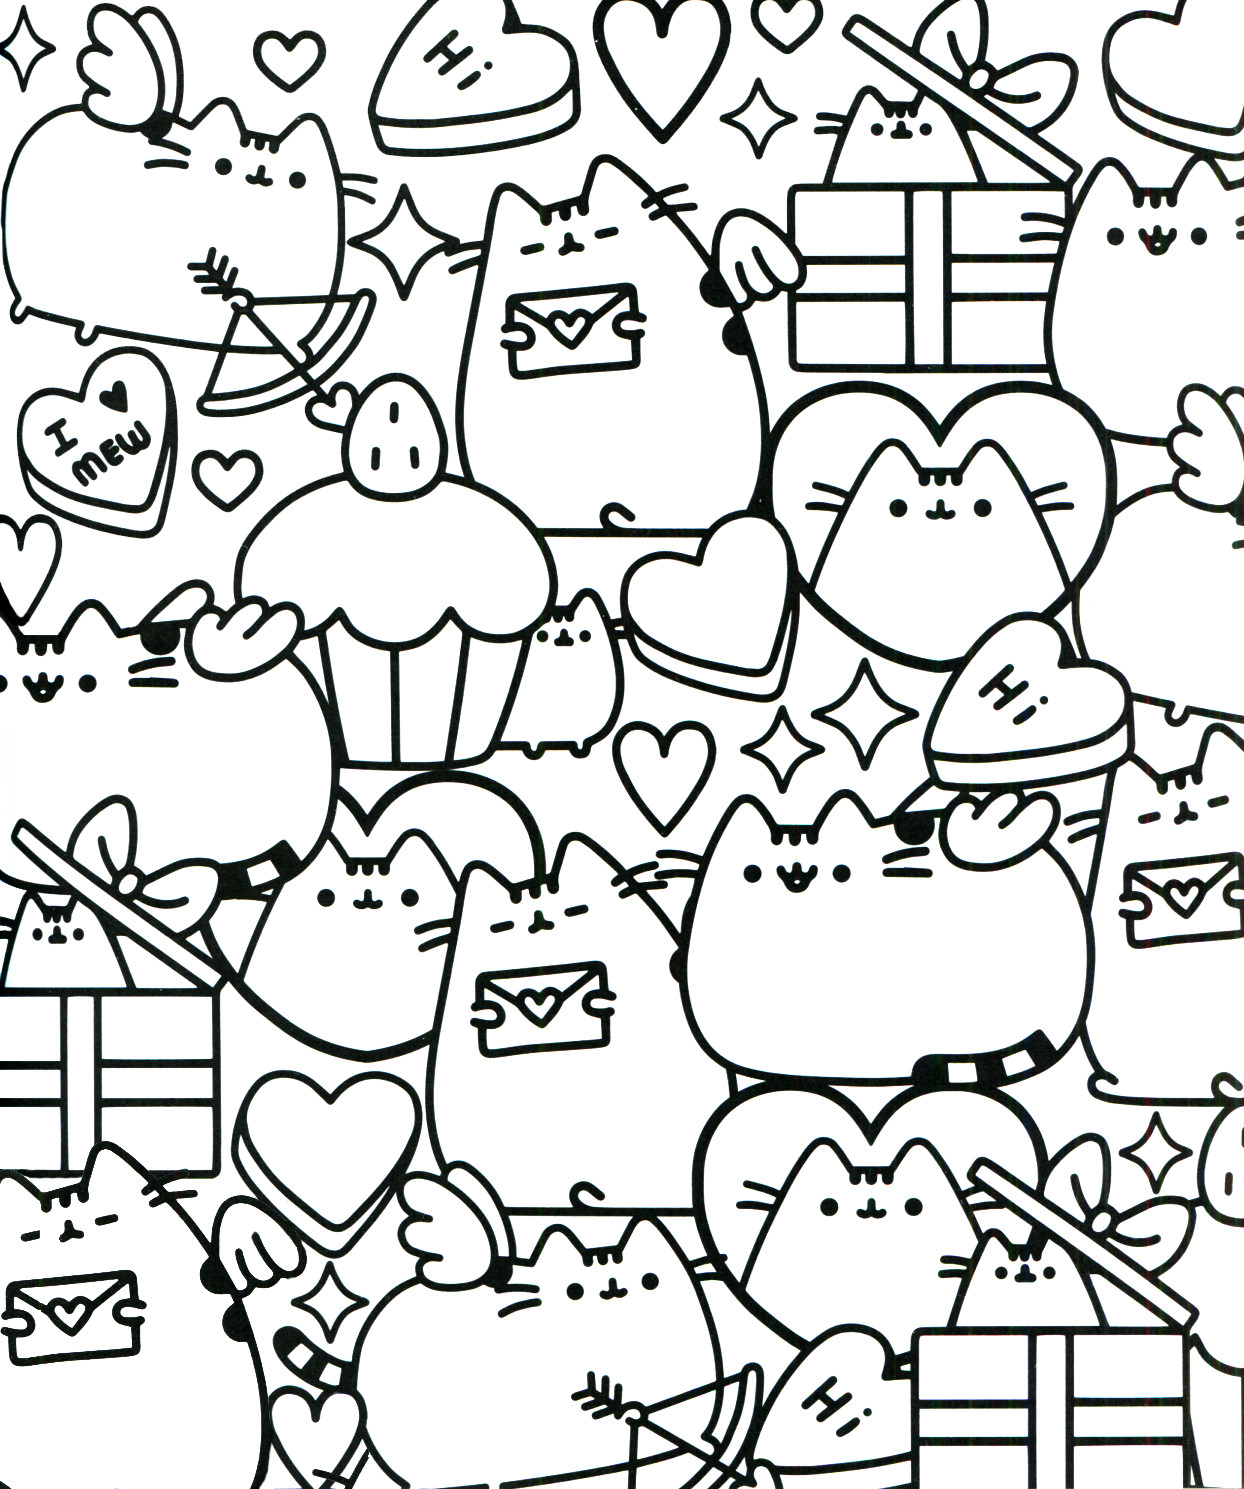 Printable Pusheen Coloring Pages
 Pusheen Coloring Book Pusheen Pusheen the Cat